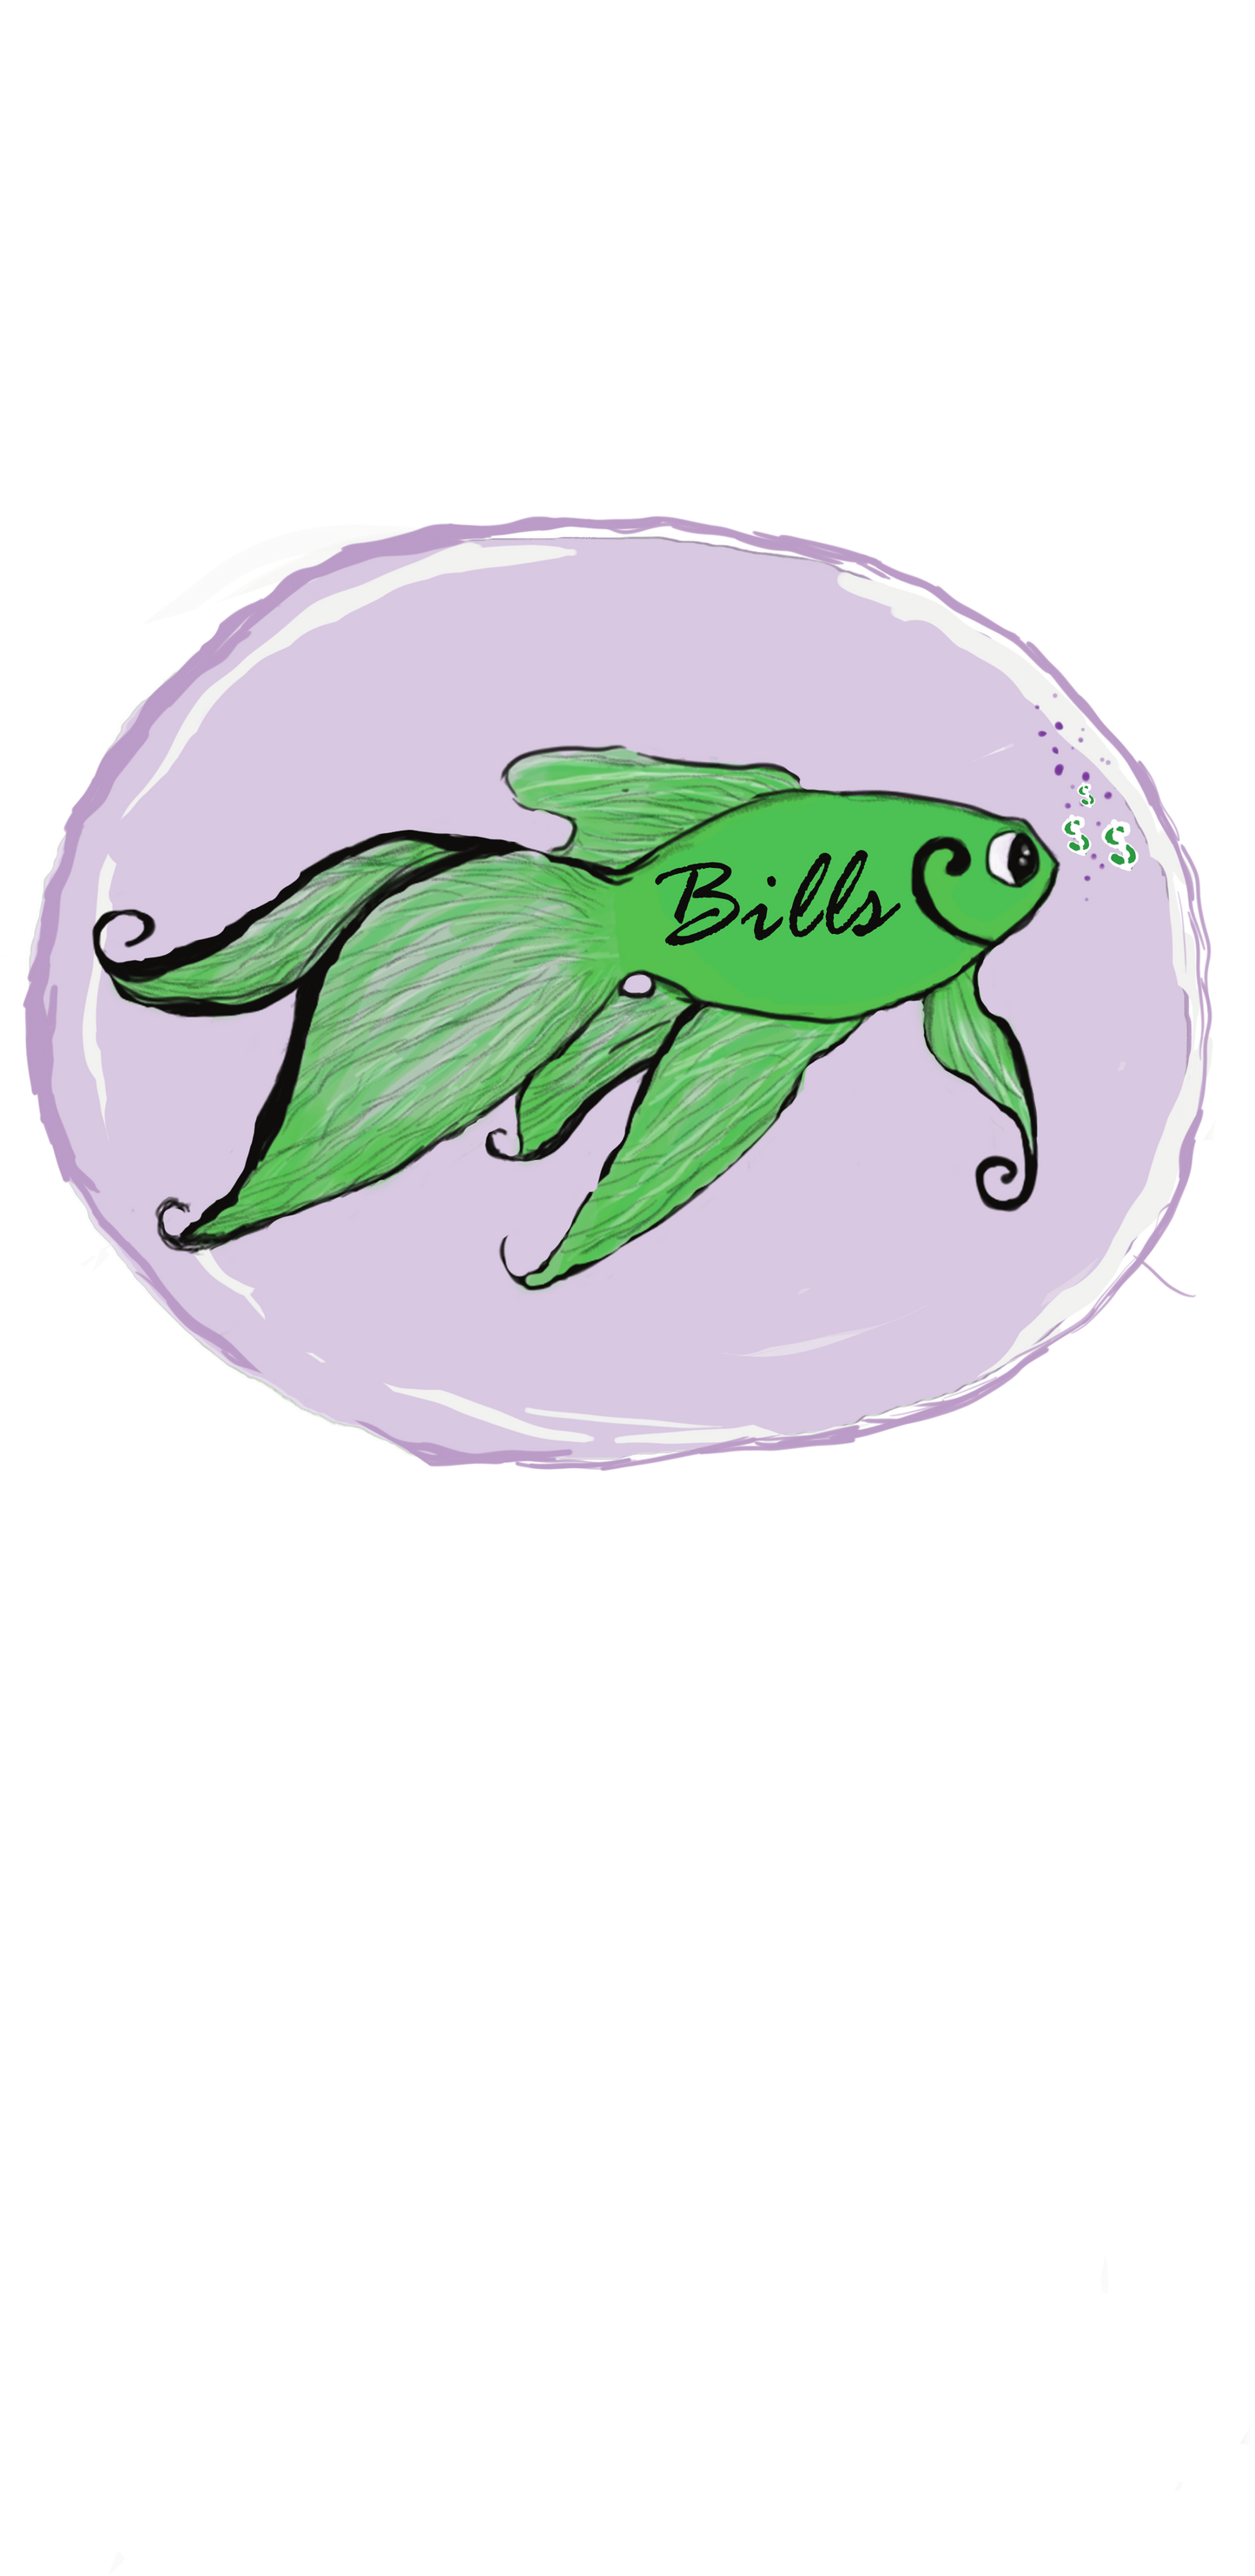 Bills Fish | Vinyl Sticker |